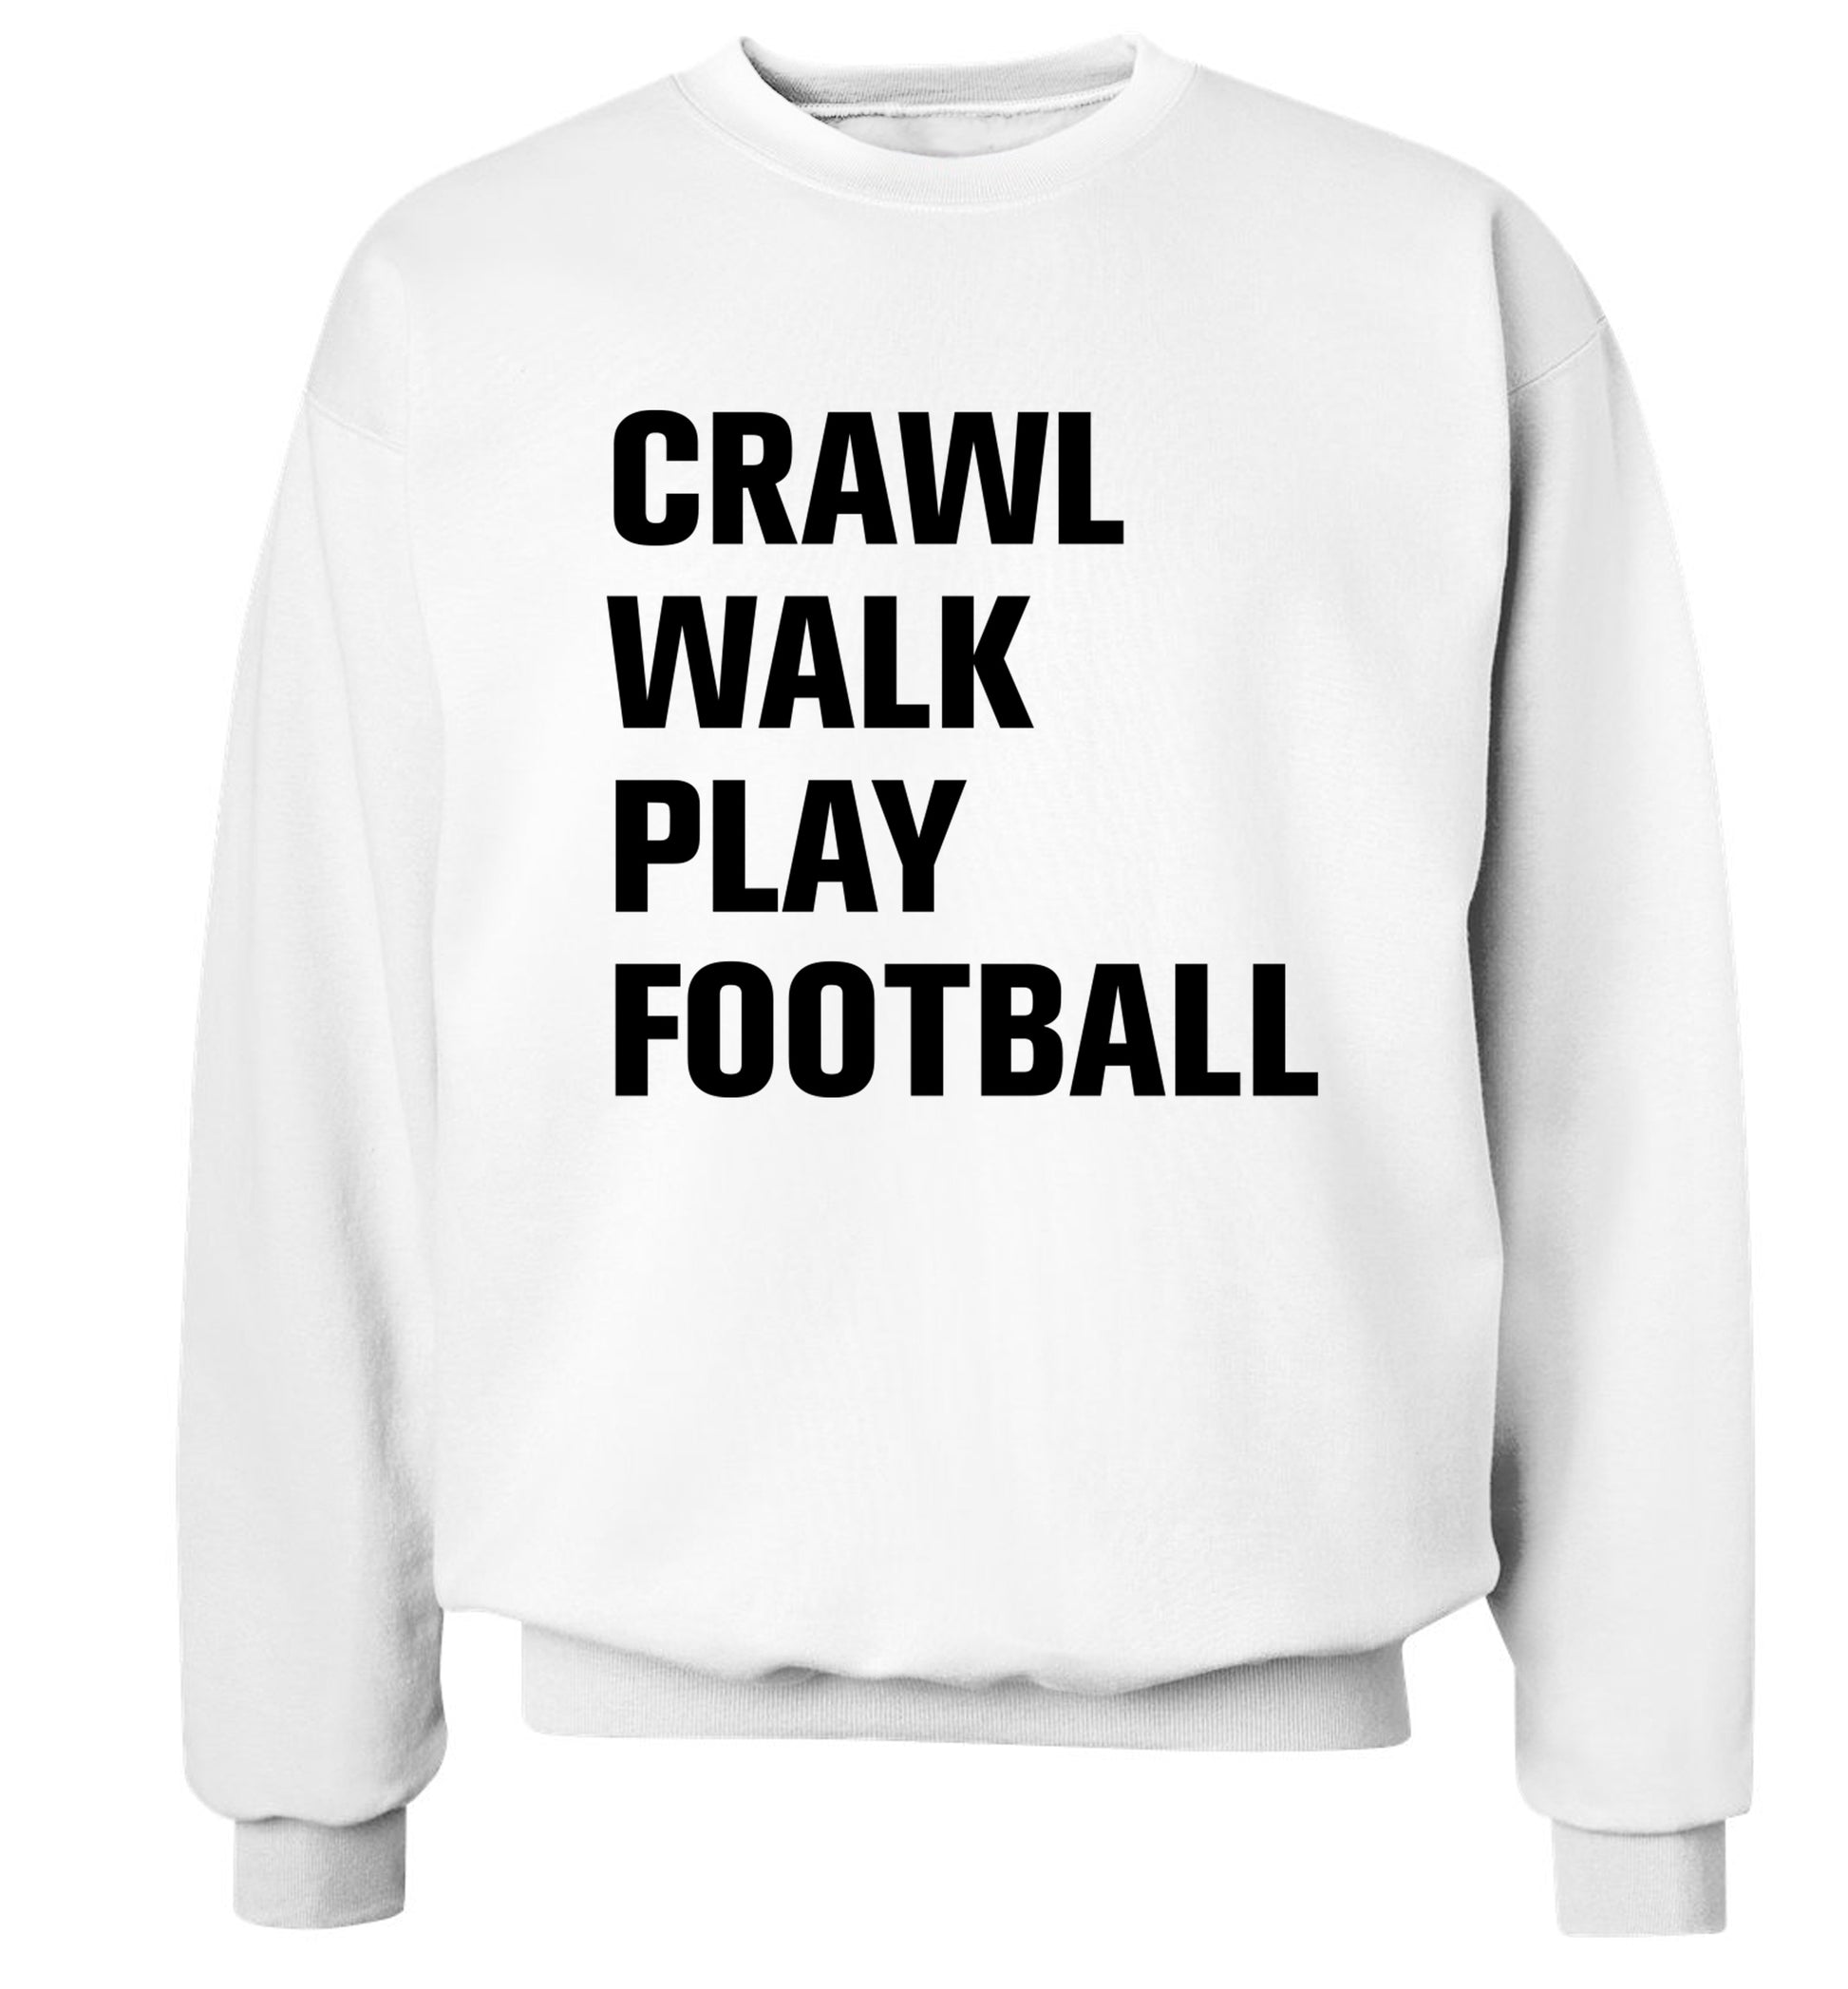 Crawl, walk, play football Adult's unisex white Sweater 2XL